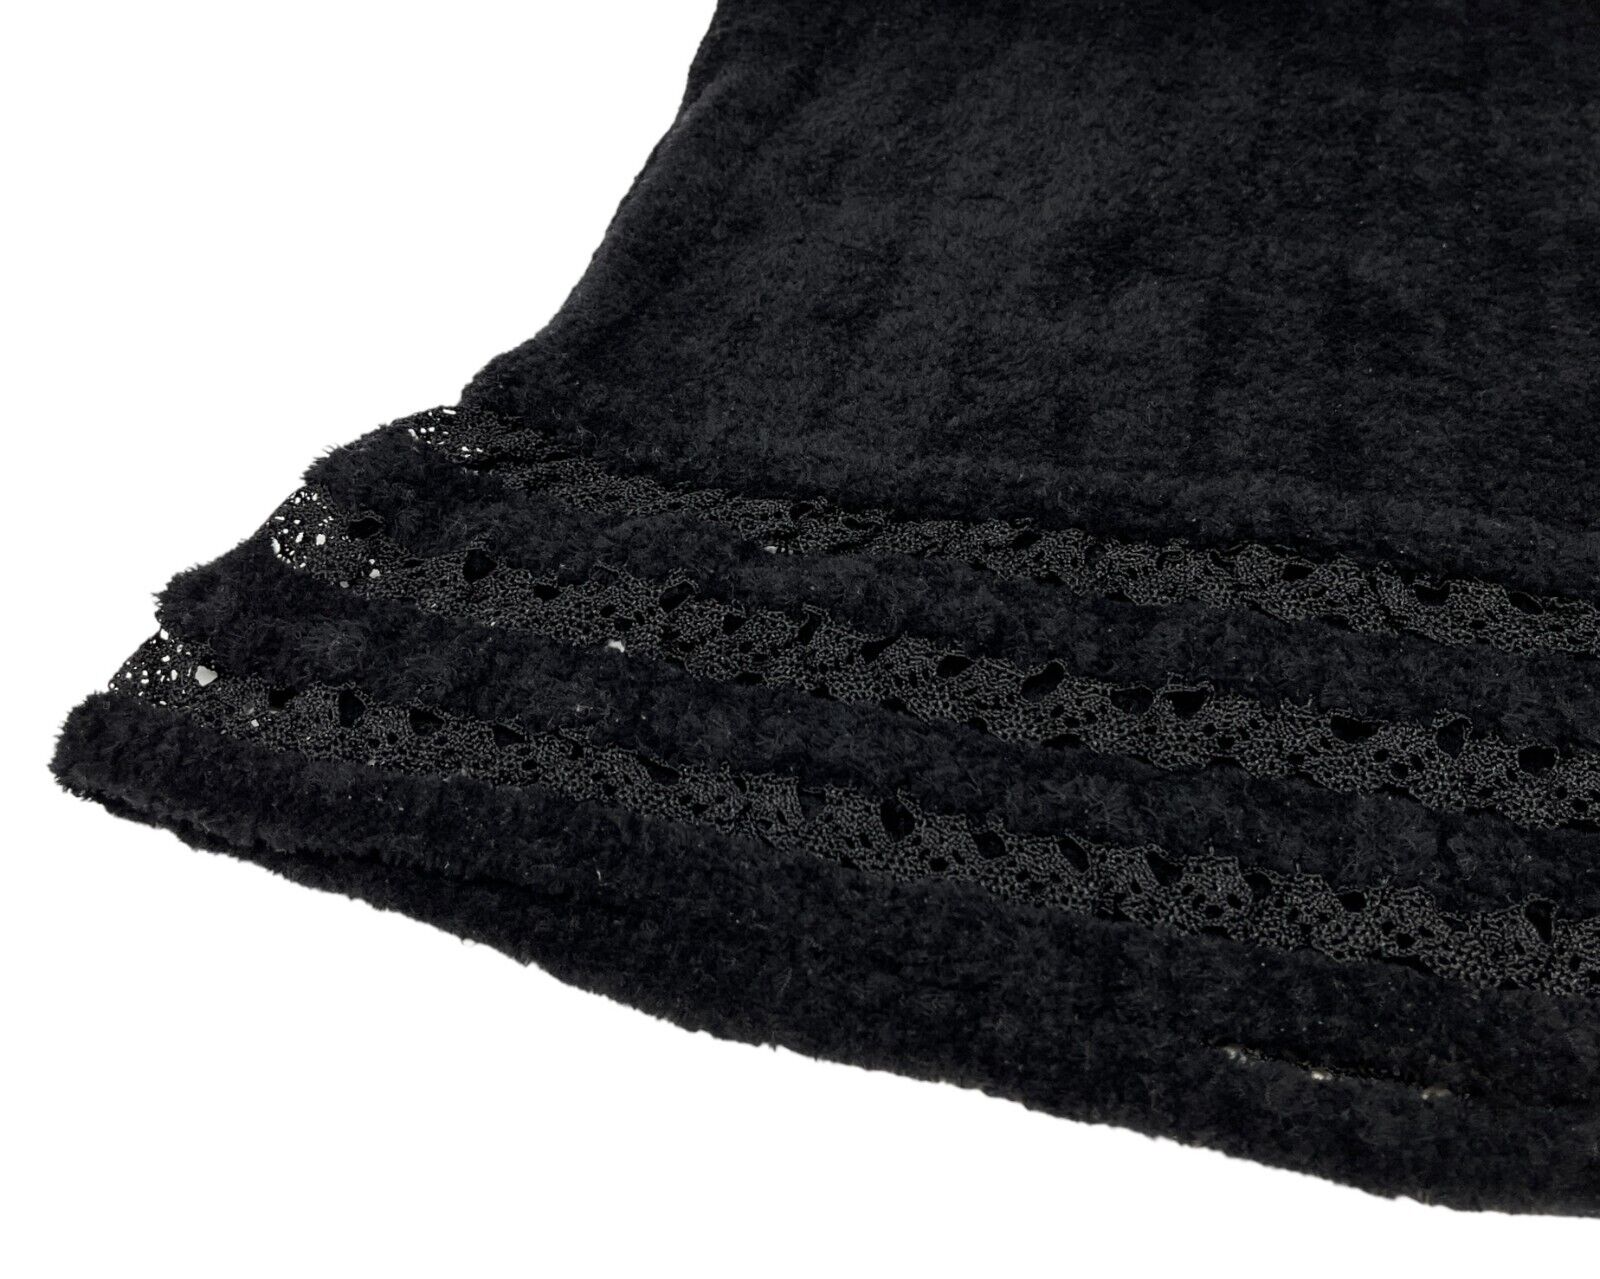 CHANEL Vintage 02A CC Logo Sleeveless Top #36 Black Wool Rhinestone Lace RankAB